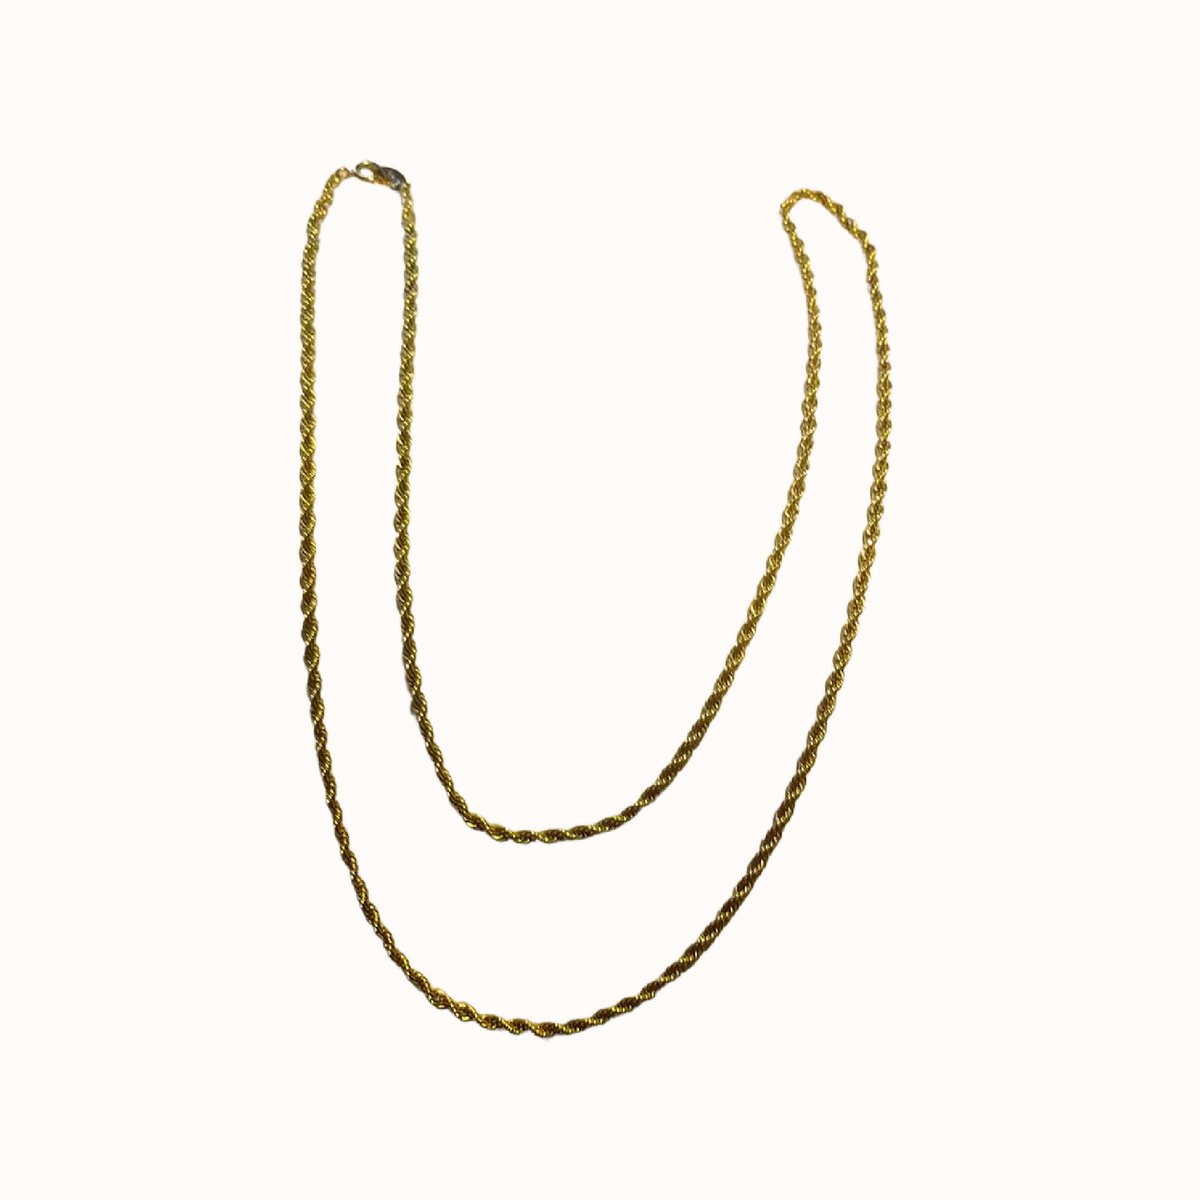 Trifari Gold Tone Rope Chain Necklace' Long etsy.me/3GBONAO #gold #statementnecklace #goldtonenecklace #junkyardblonde #gotvintage #goldtoneropechain #etsysellsvintage #vintagechain #goldtonechain